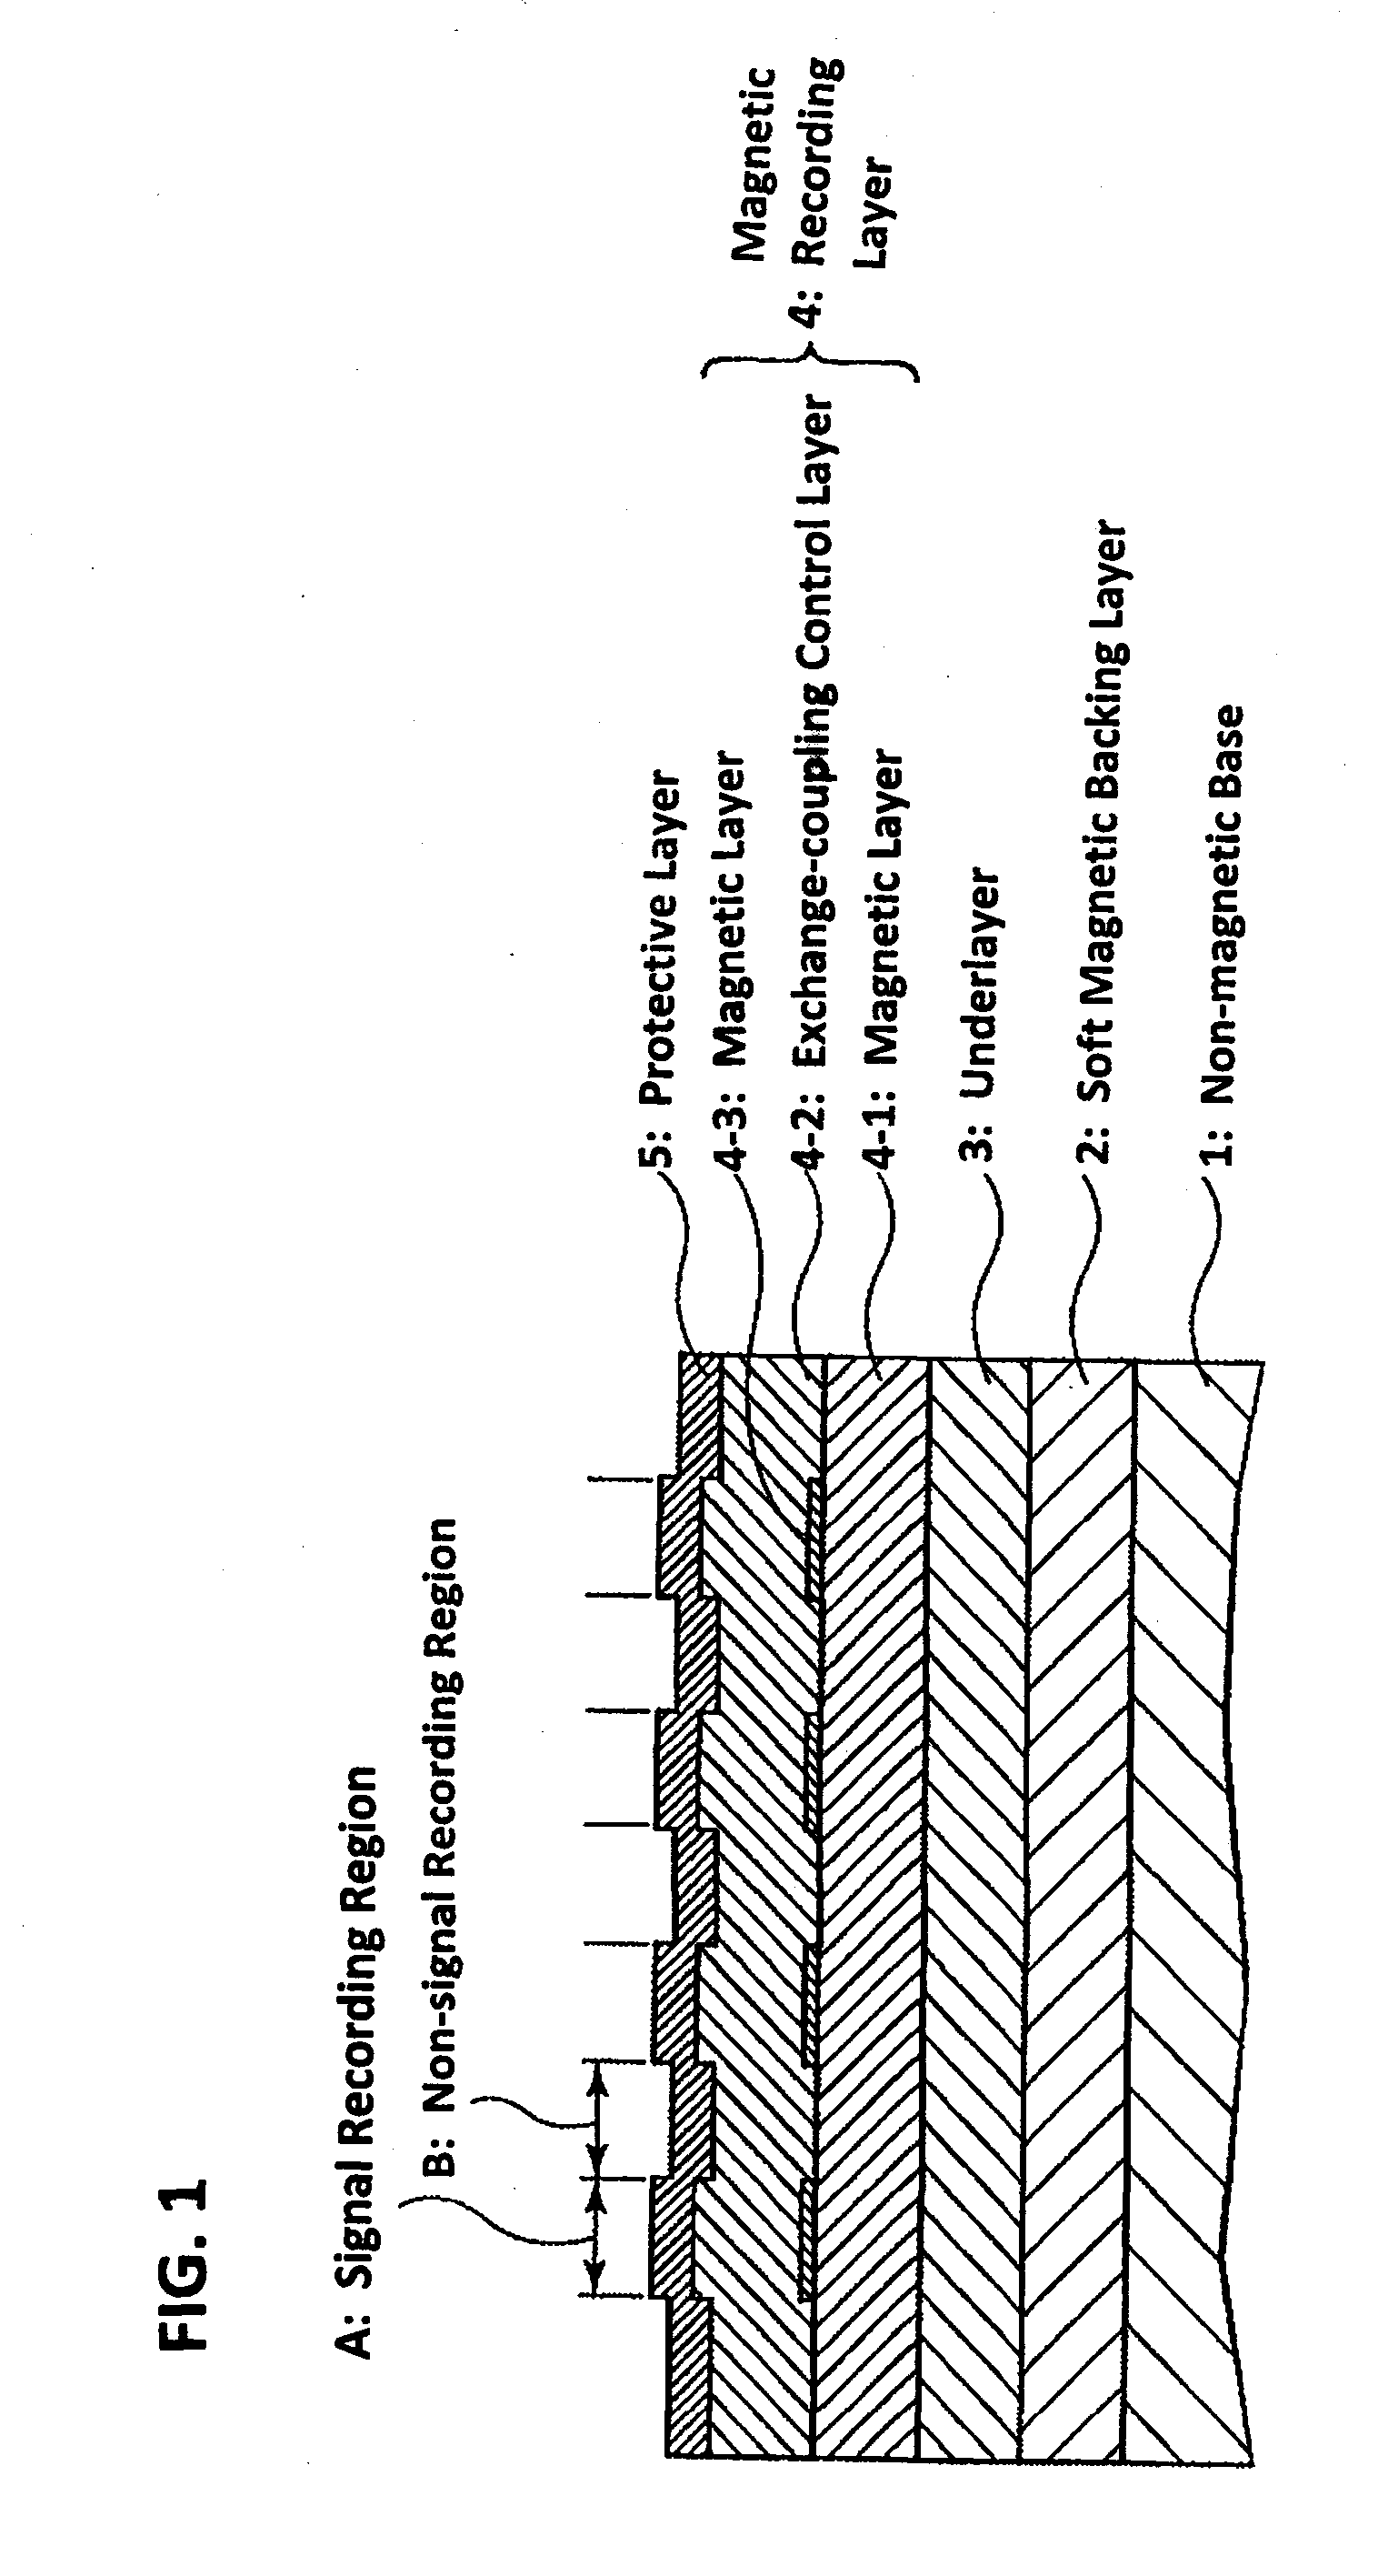 Magnetic recording medium and method of manufacturing same